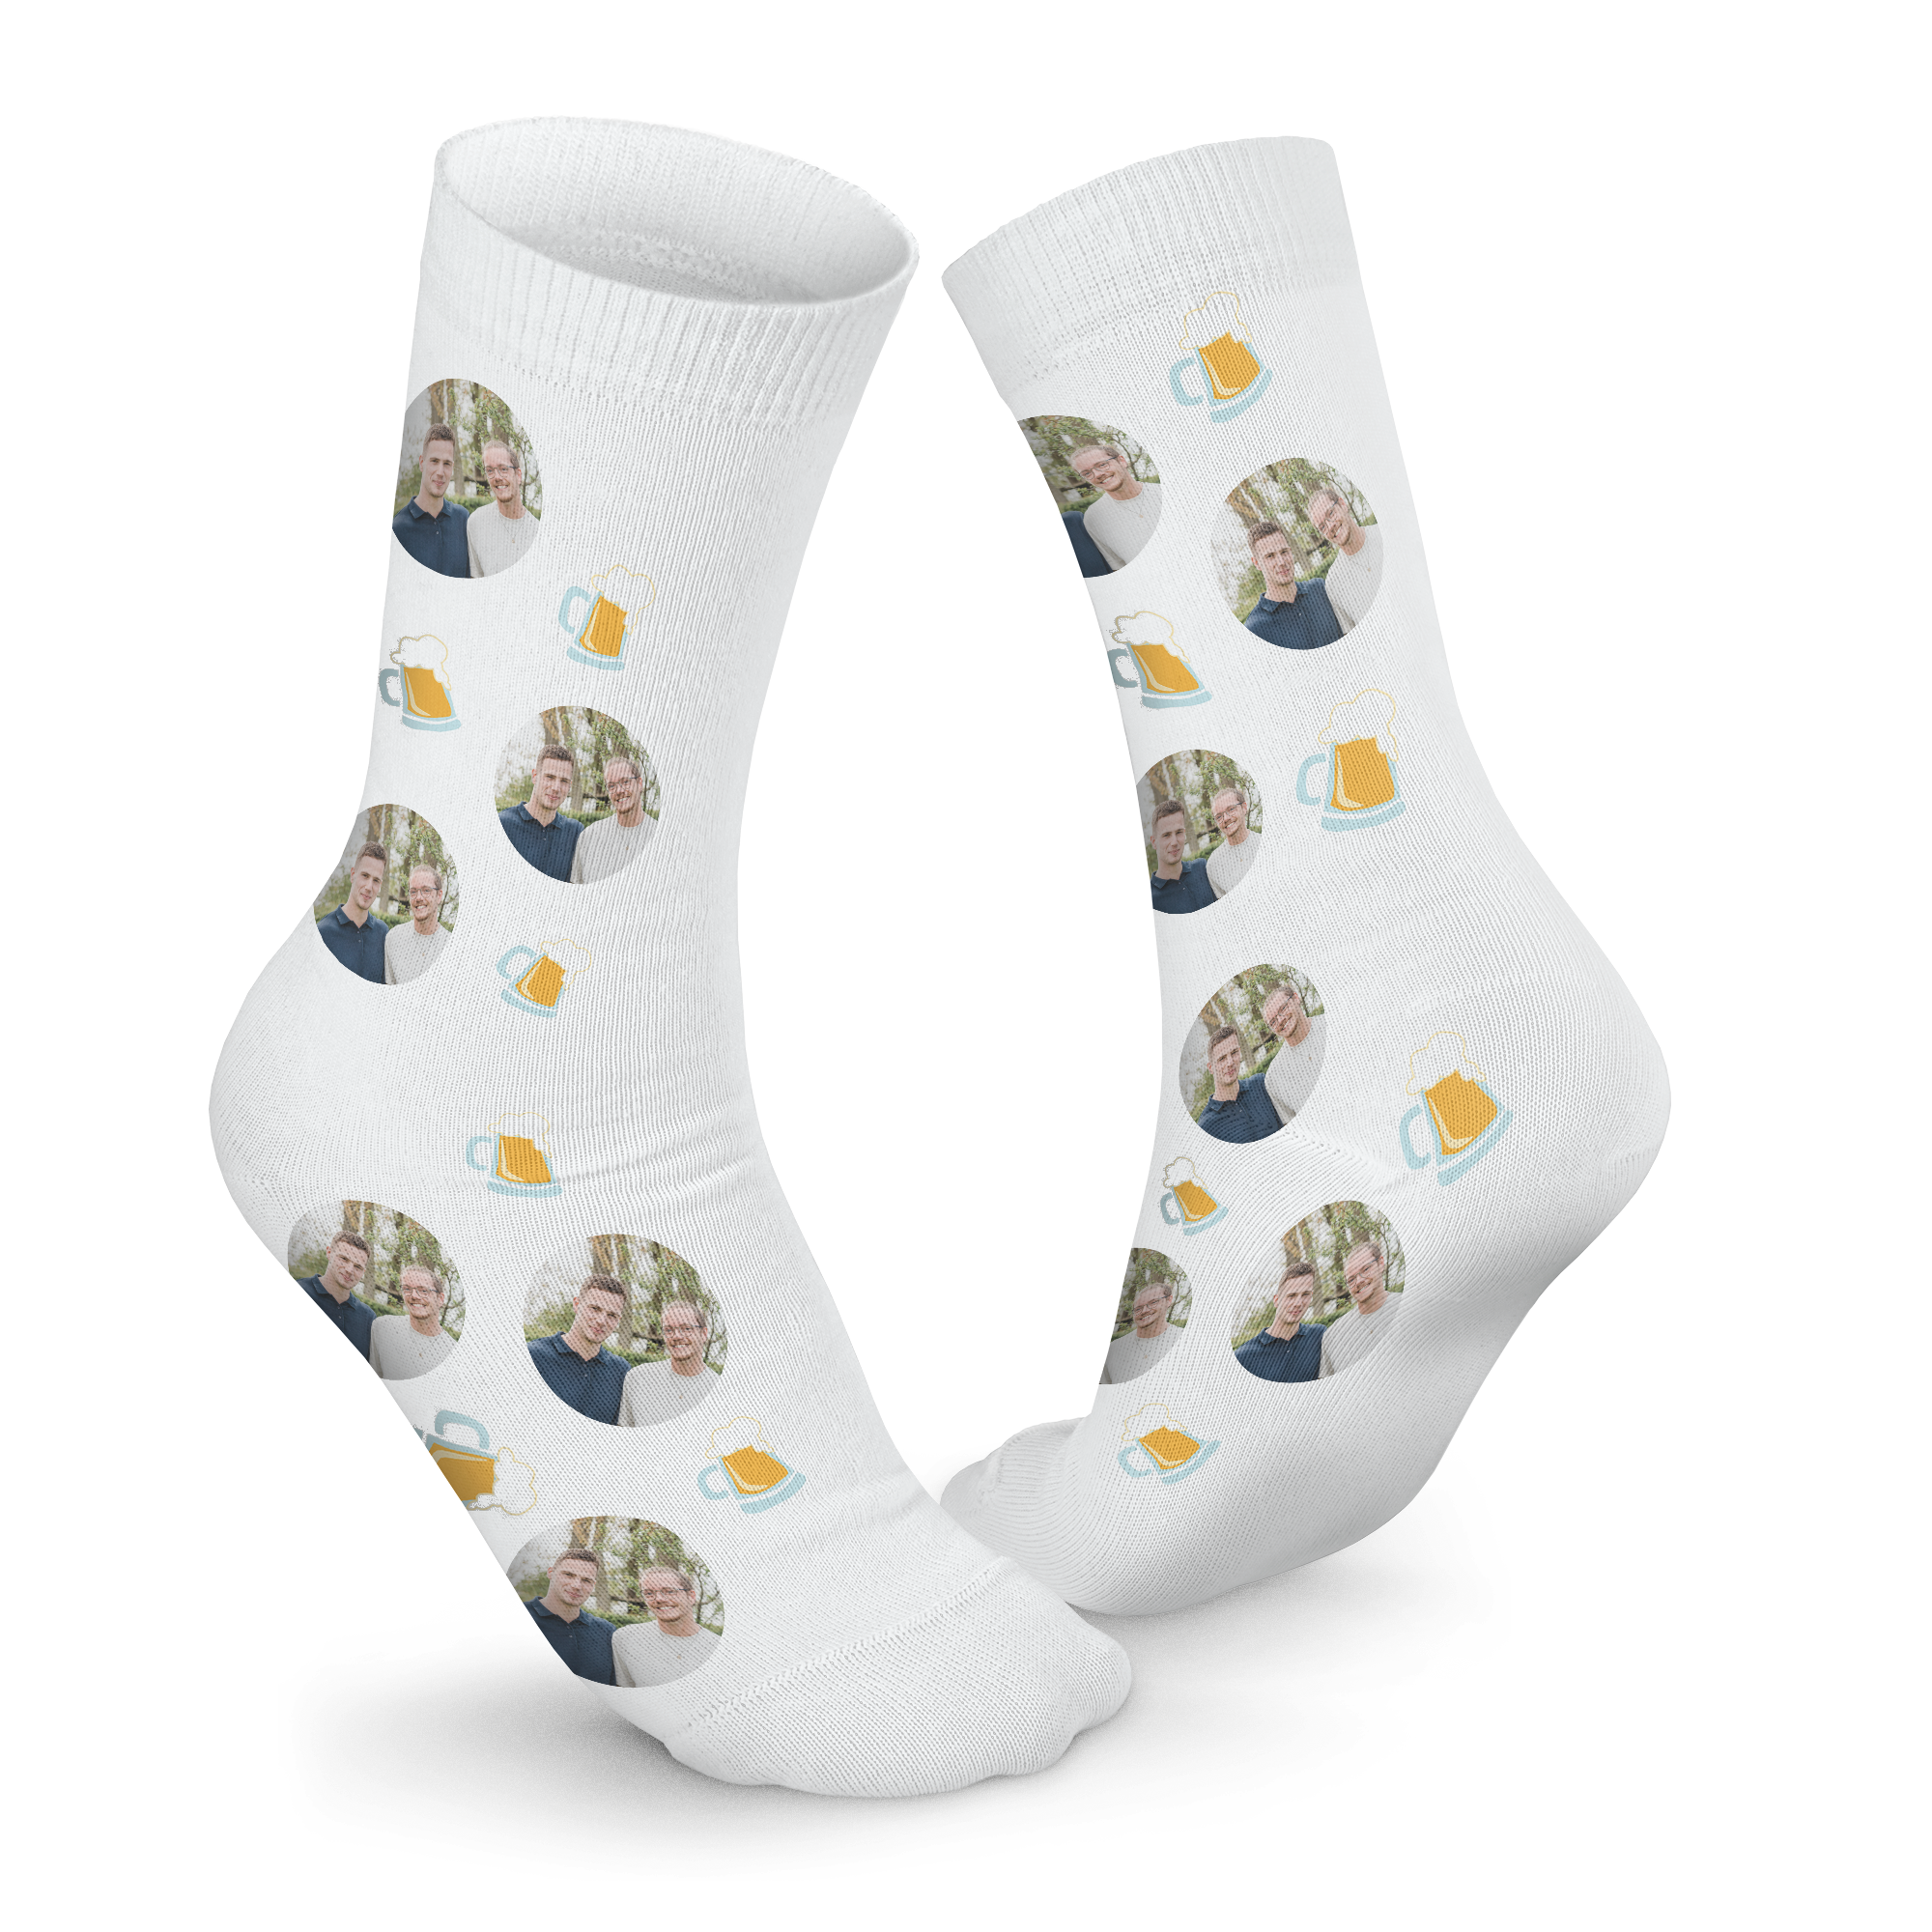 Personalised socks - Size 39-42